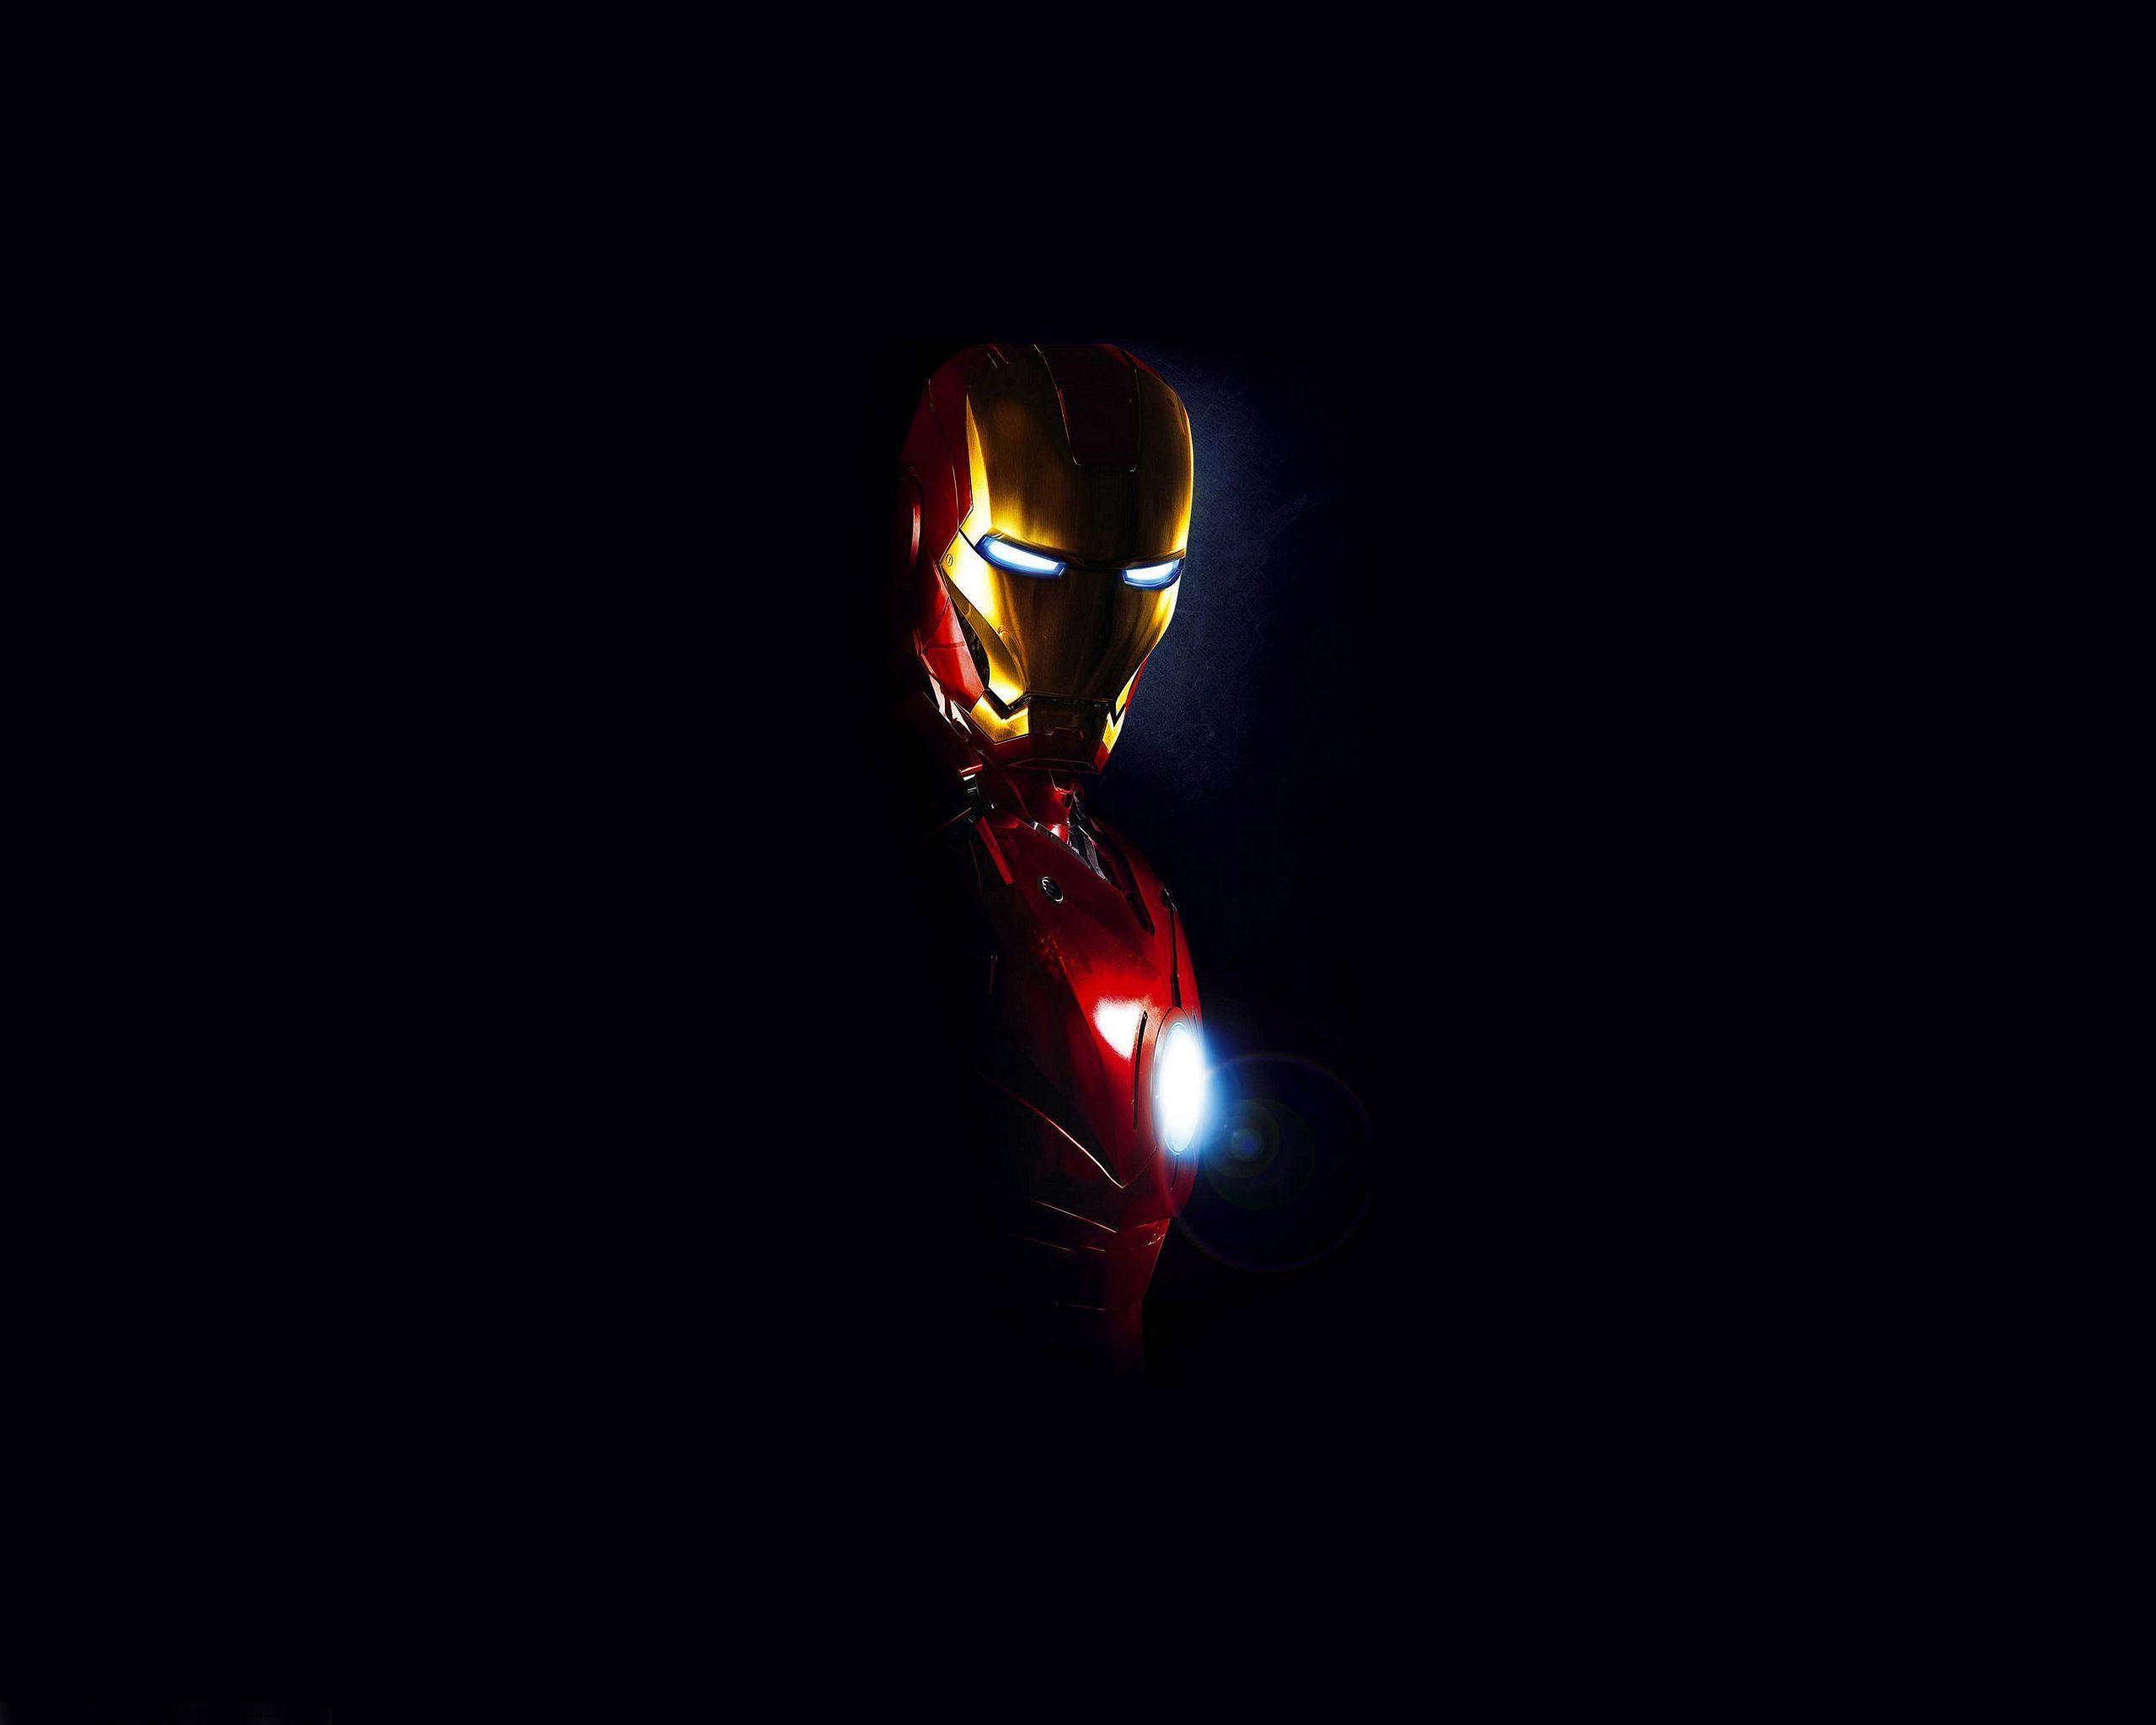 Iron Man HD Wallpaper